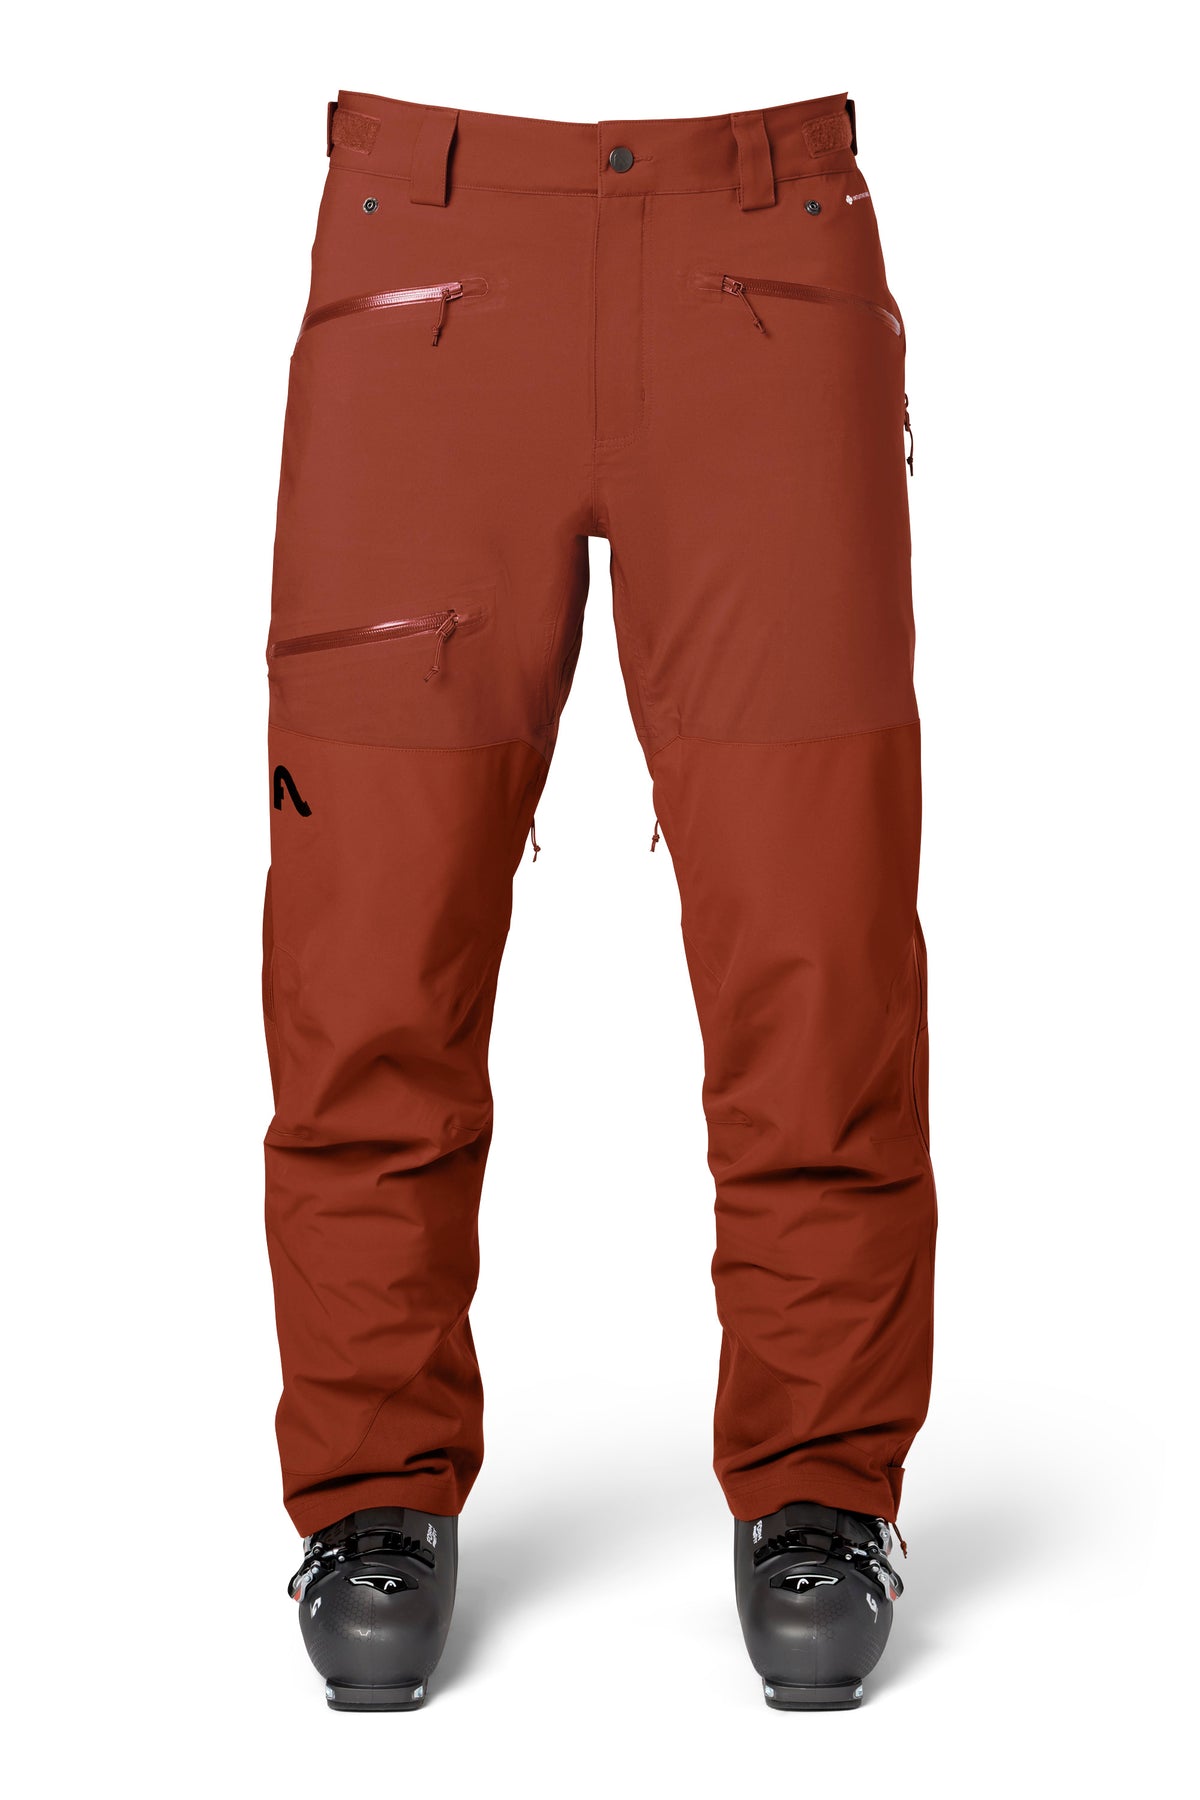 Magnum Pant - Men's Softshell Ski Pants | Flylow Gear